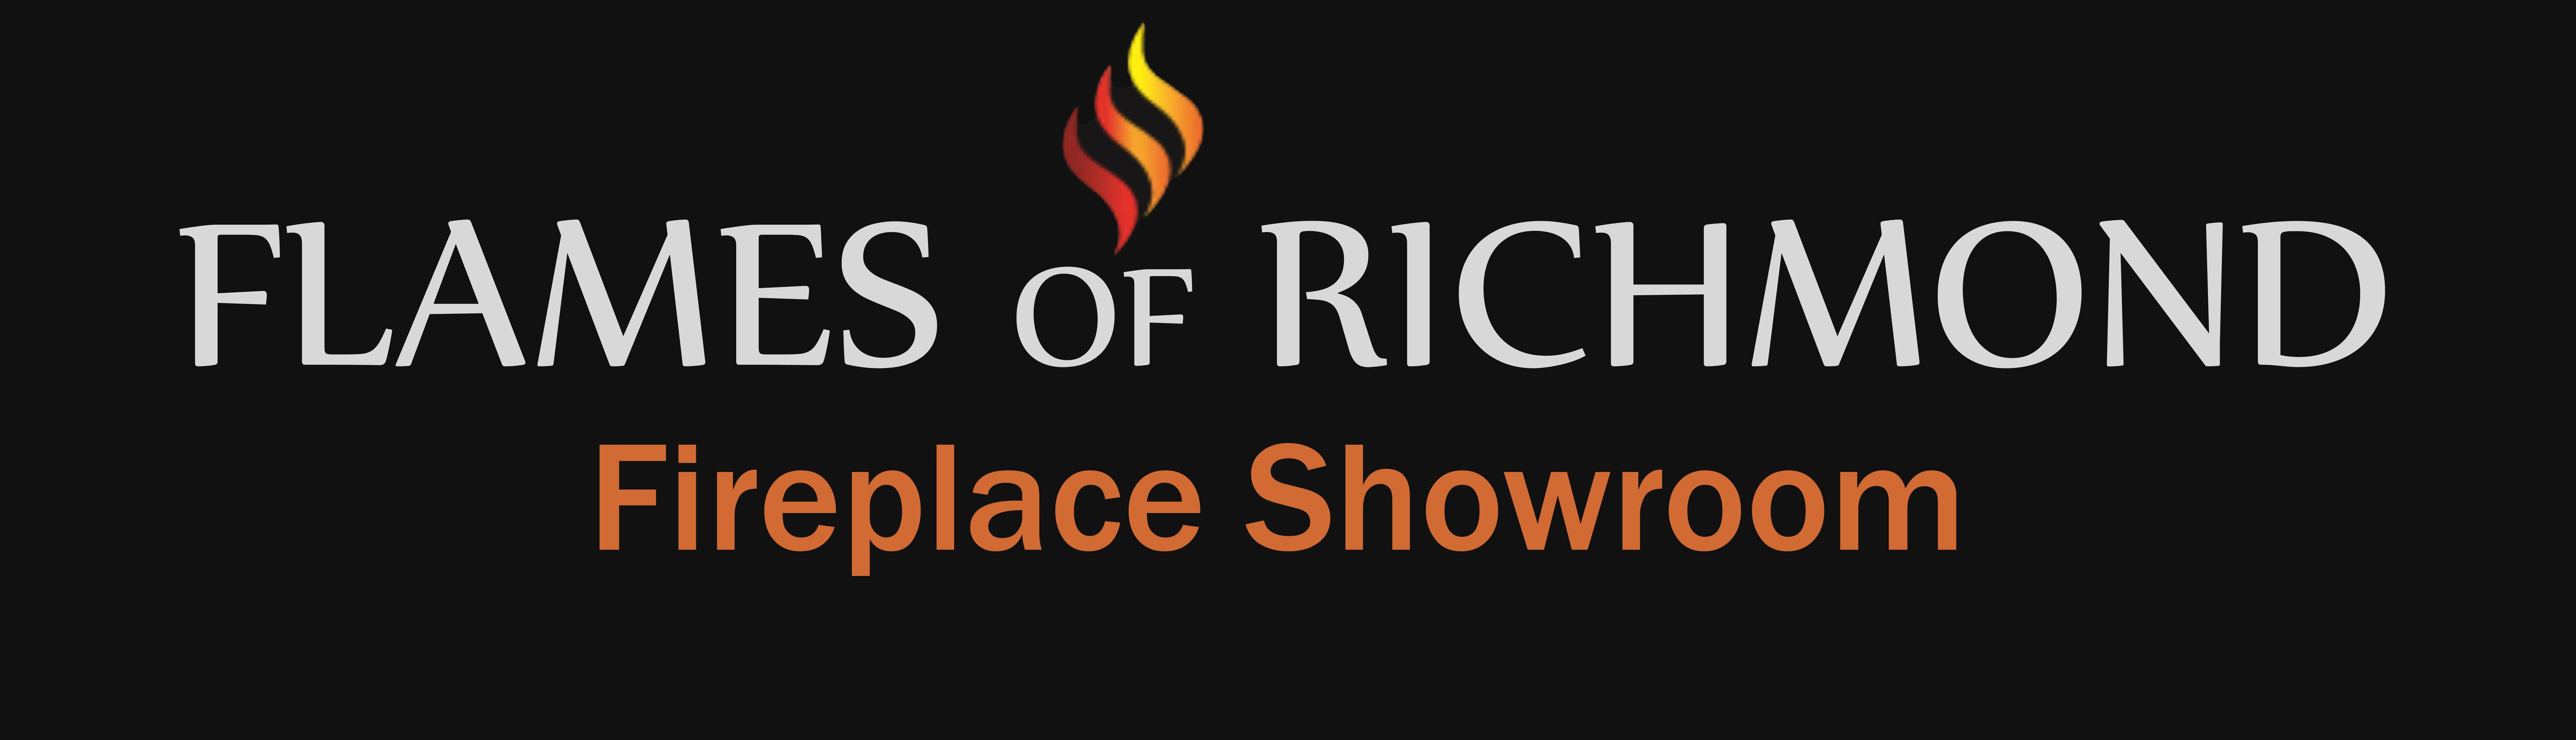 Flames of Richmond Ltd